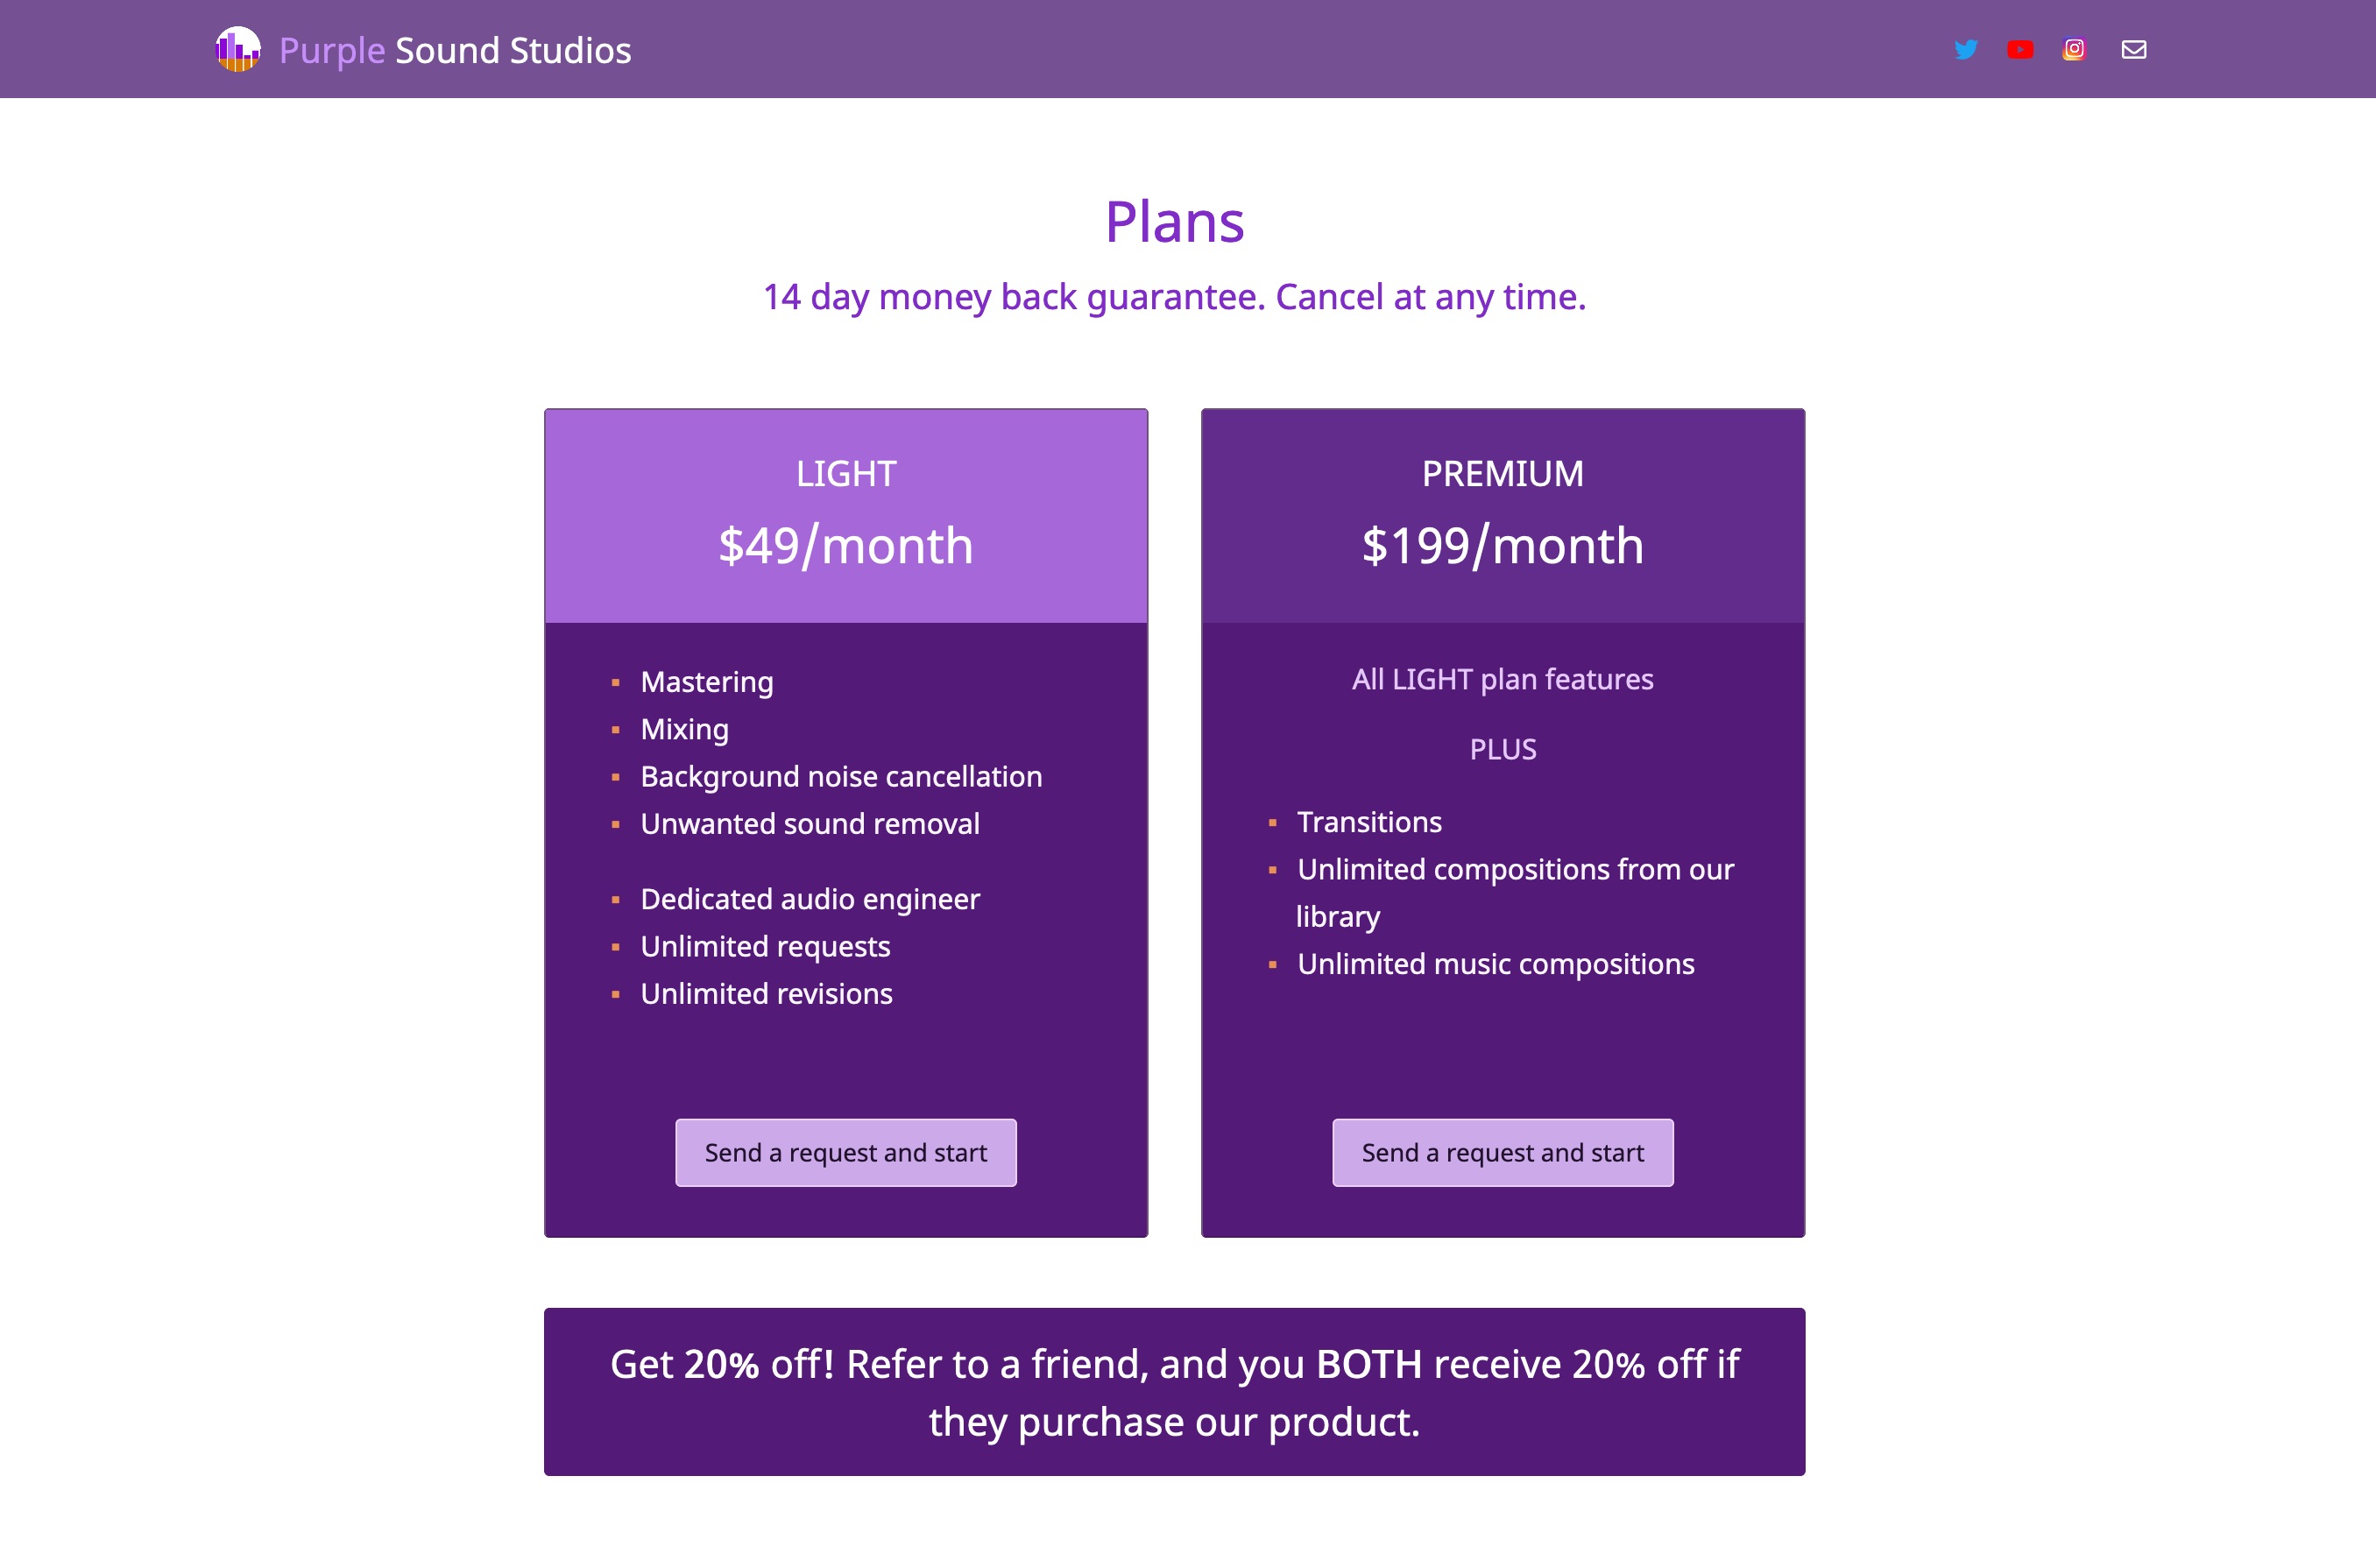 Pricing options for purplesoundstudios.com